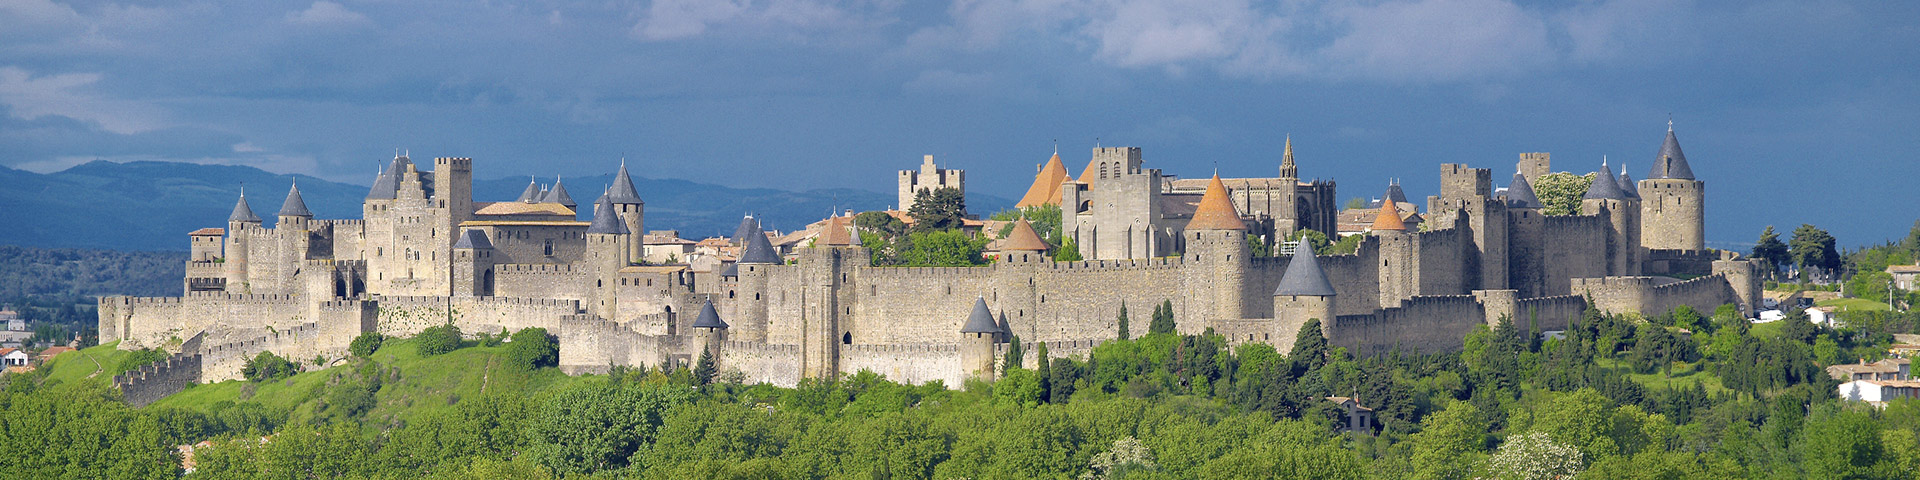 Carcassonne #21